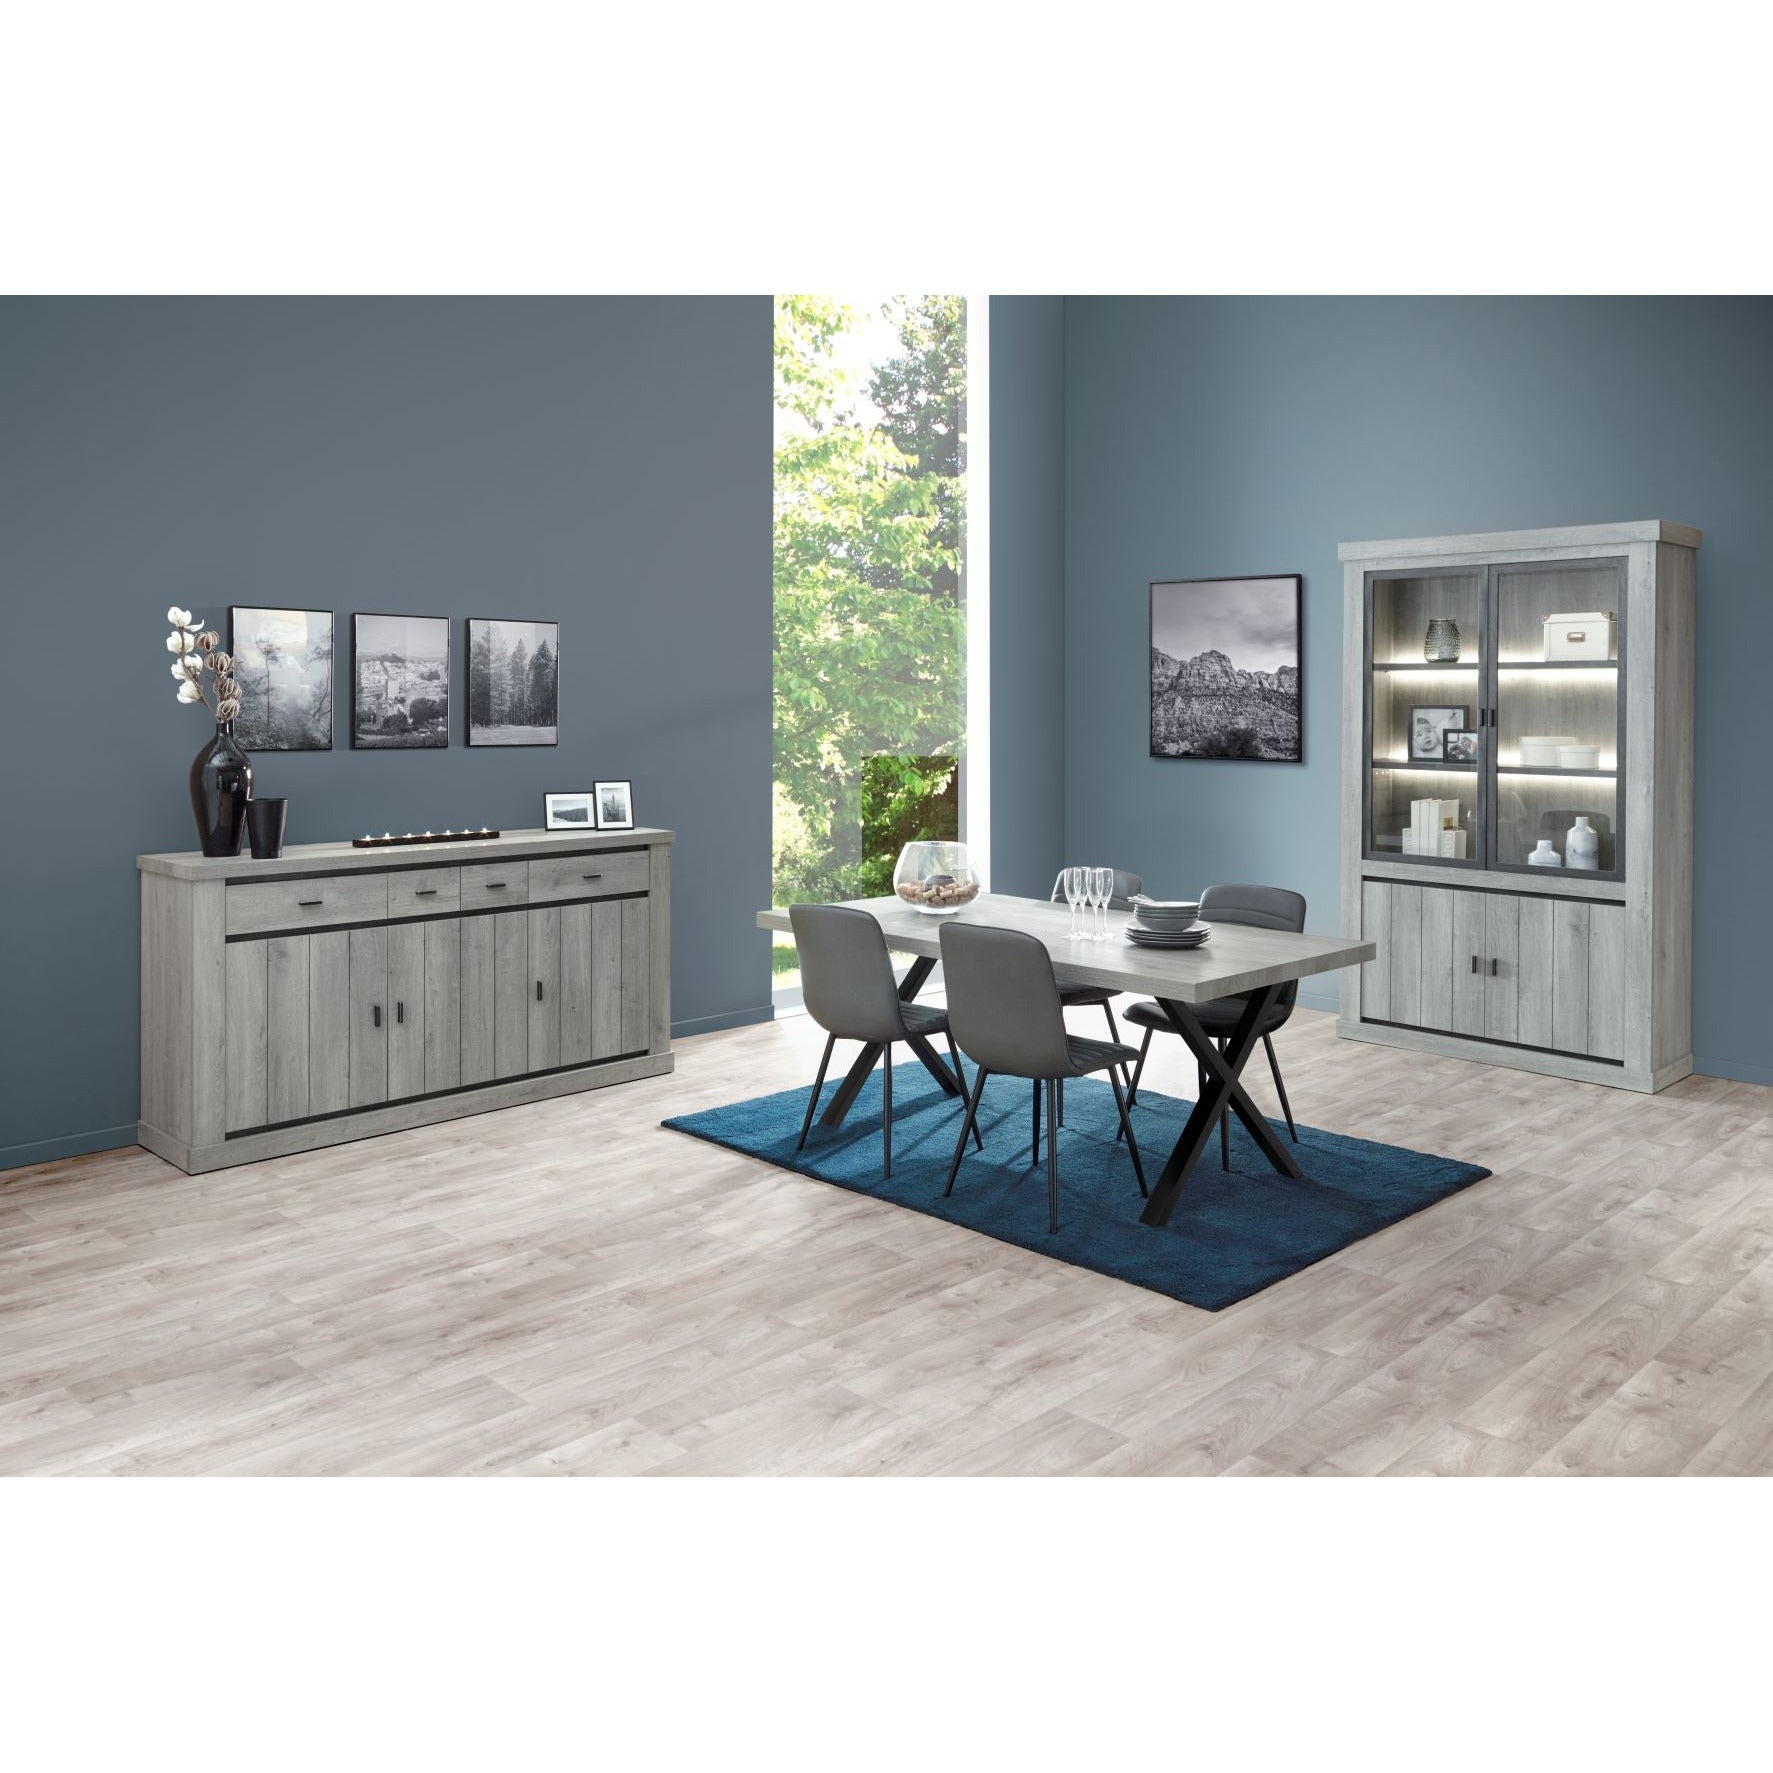 TV cabinet | Furniture series Coupé | natural, gray, black